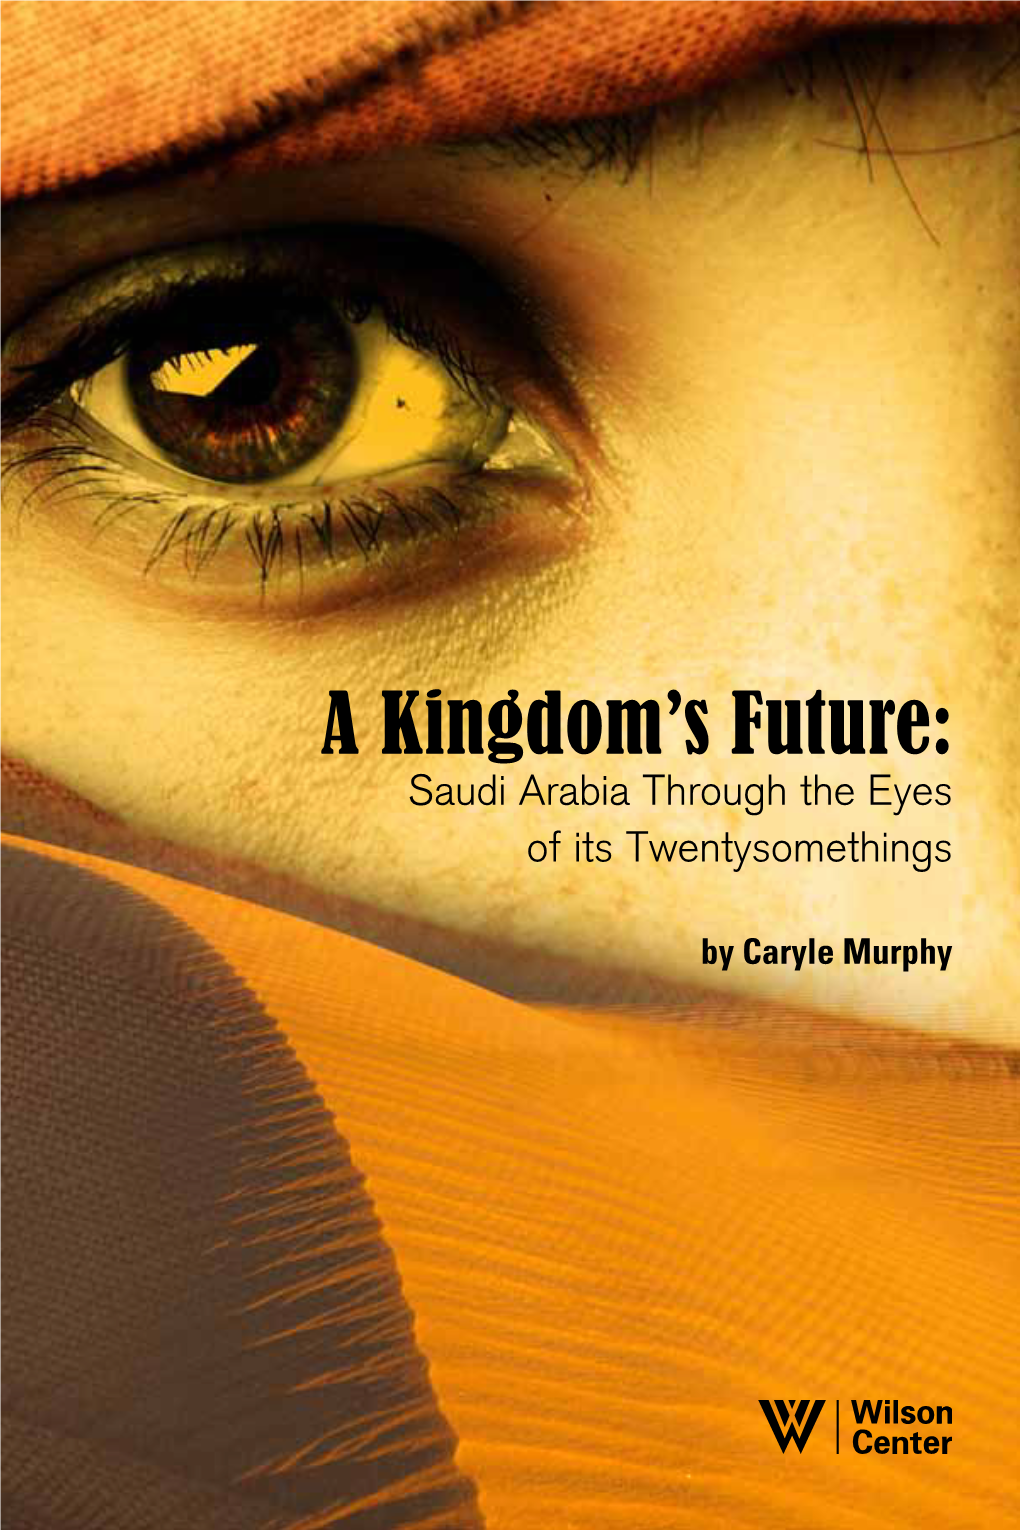 A Kingdom's Future: Saudi Arabia Through the Eyes of Its Twentysomethingsdownload